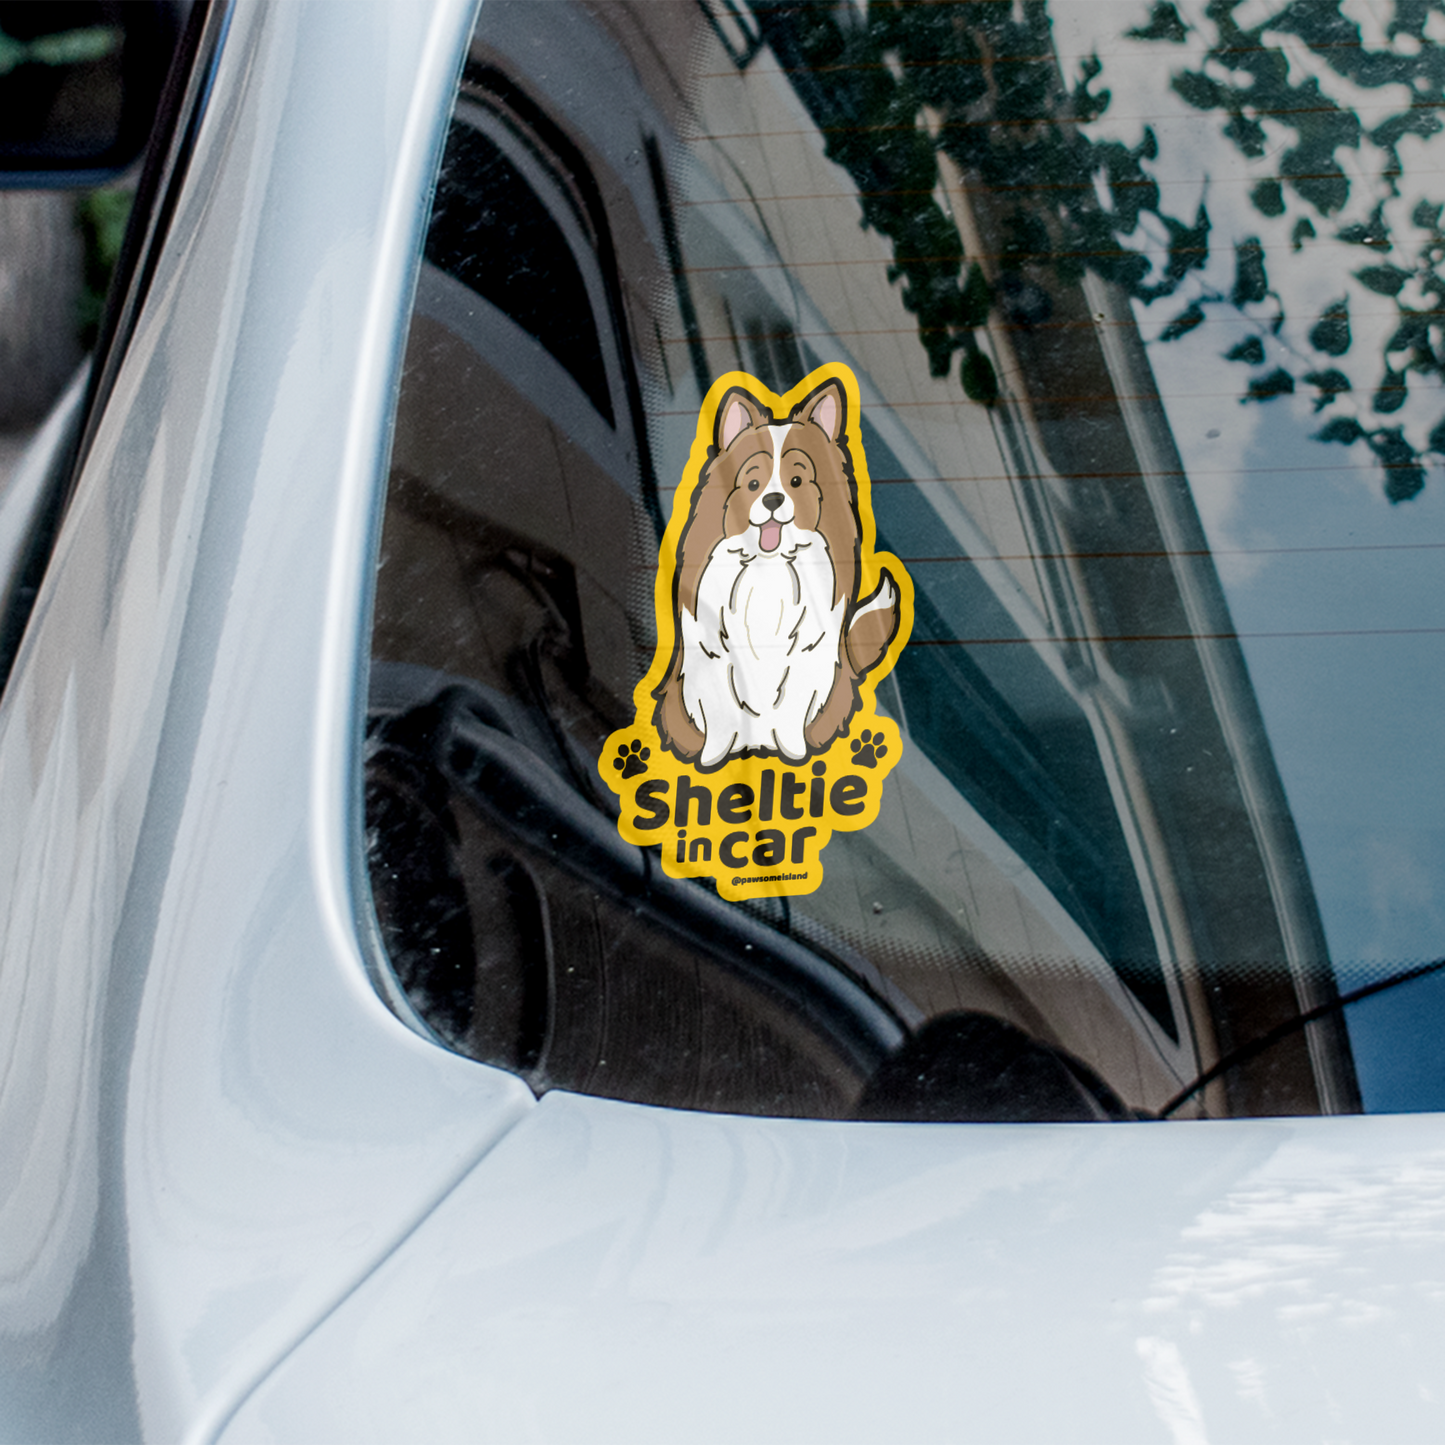 Cavalier King Charles Spaniel Car Sticker, Cavalier Cute Dog Vinyl Sticker, Sticks On The Inside Facing Out